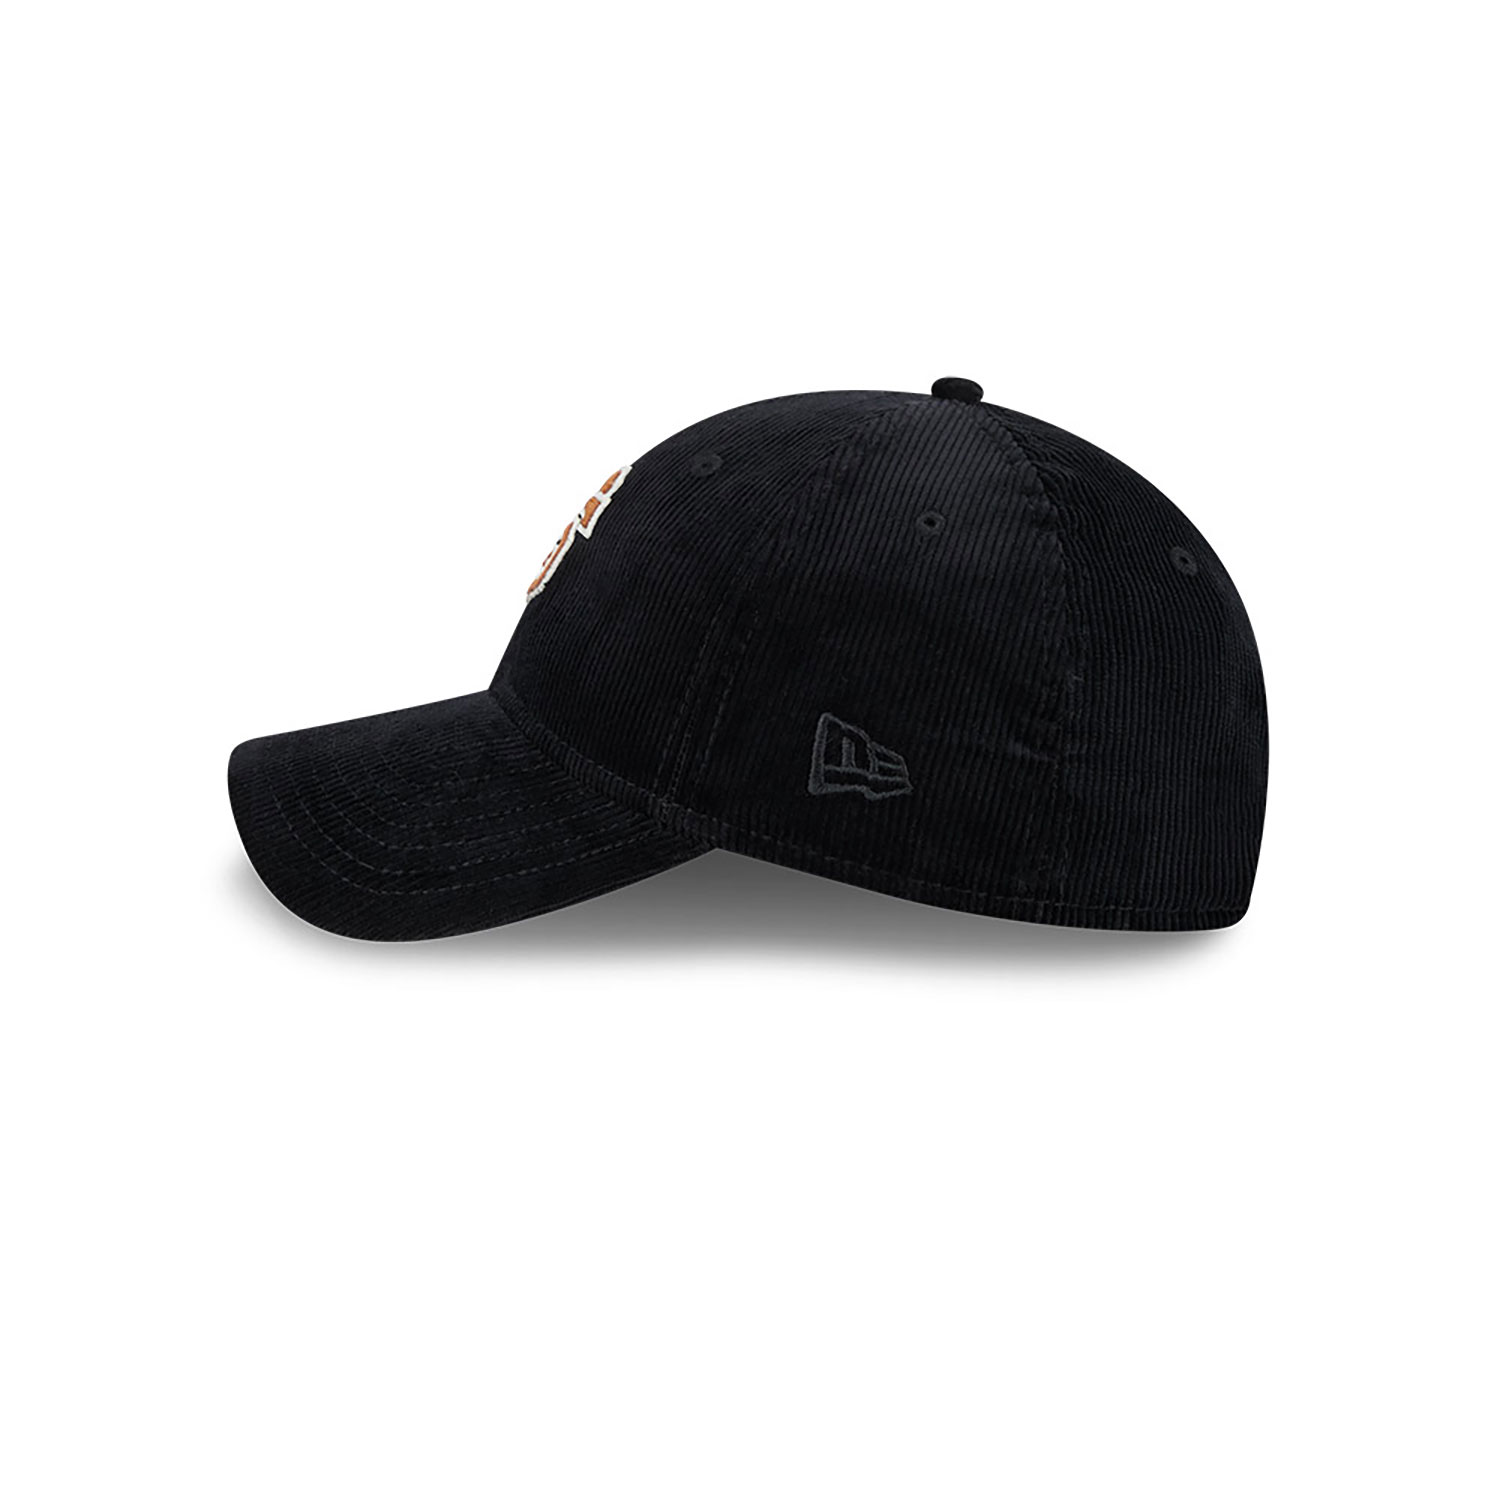 San Francisco Giants Cord Black 9TWENTY Adjustable Cap